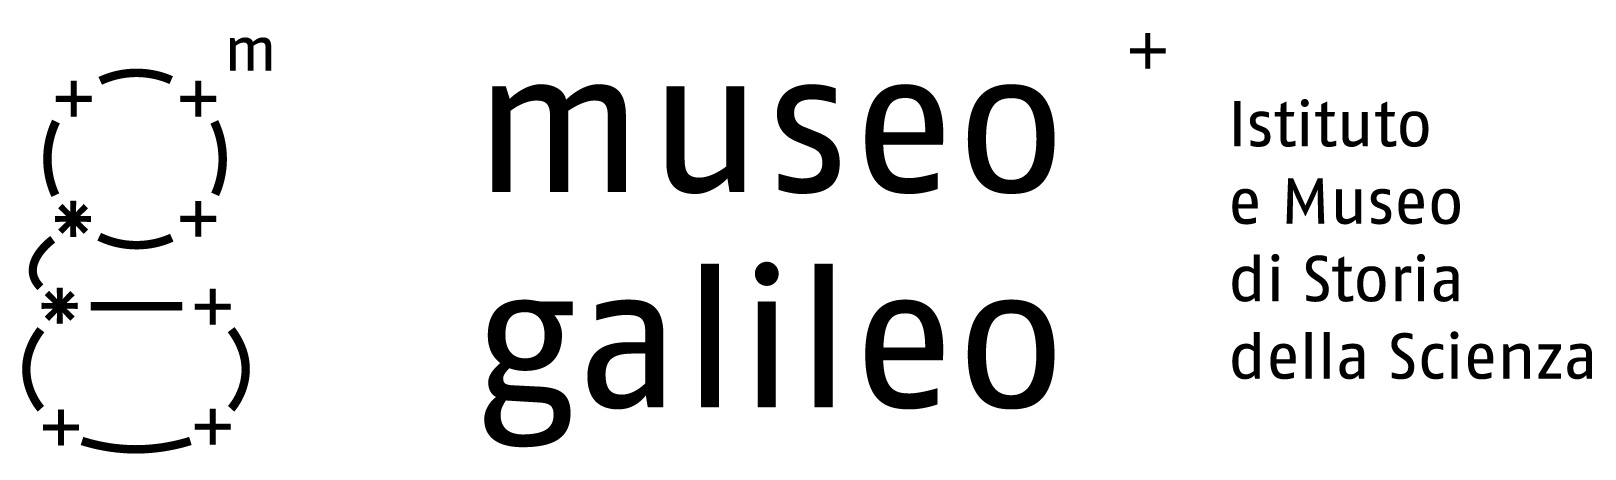 Museum Galileo